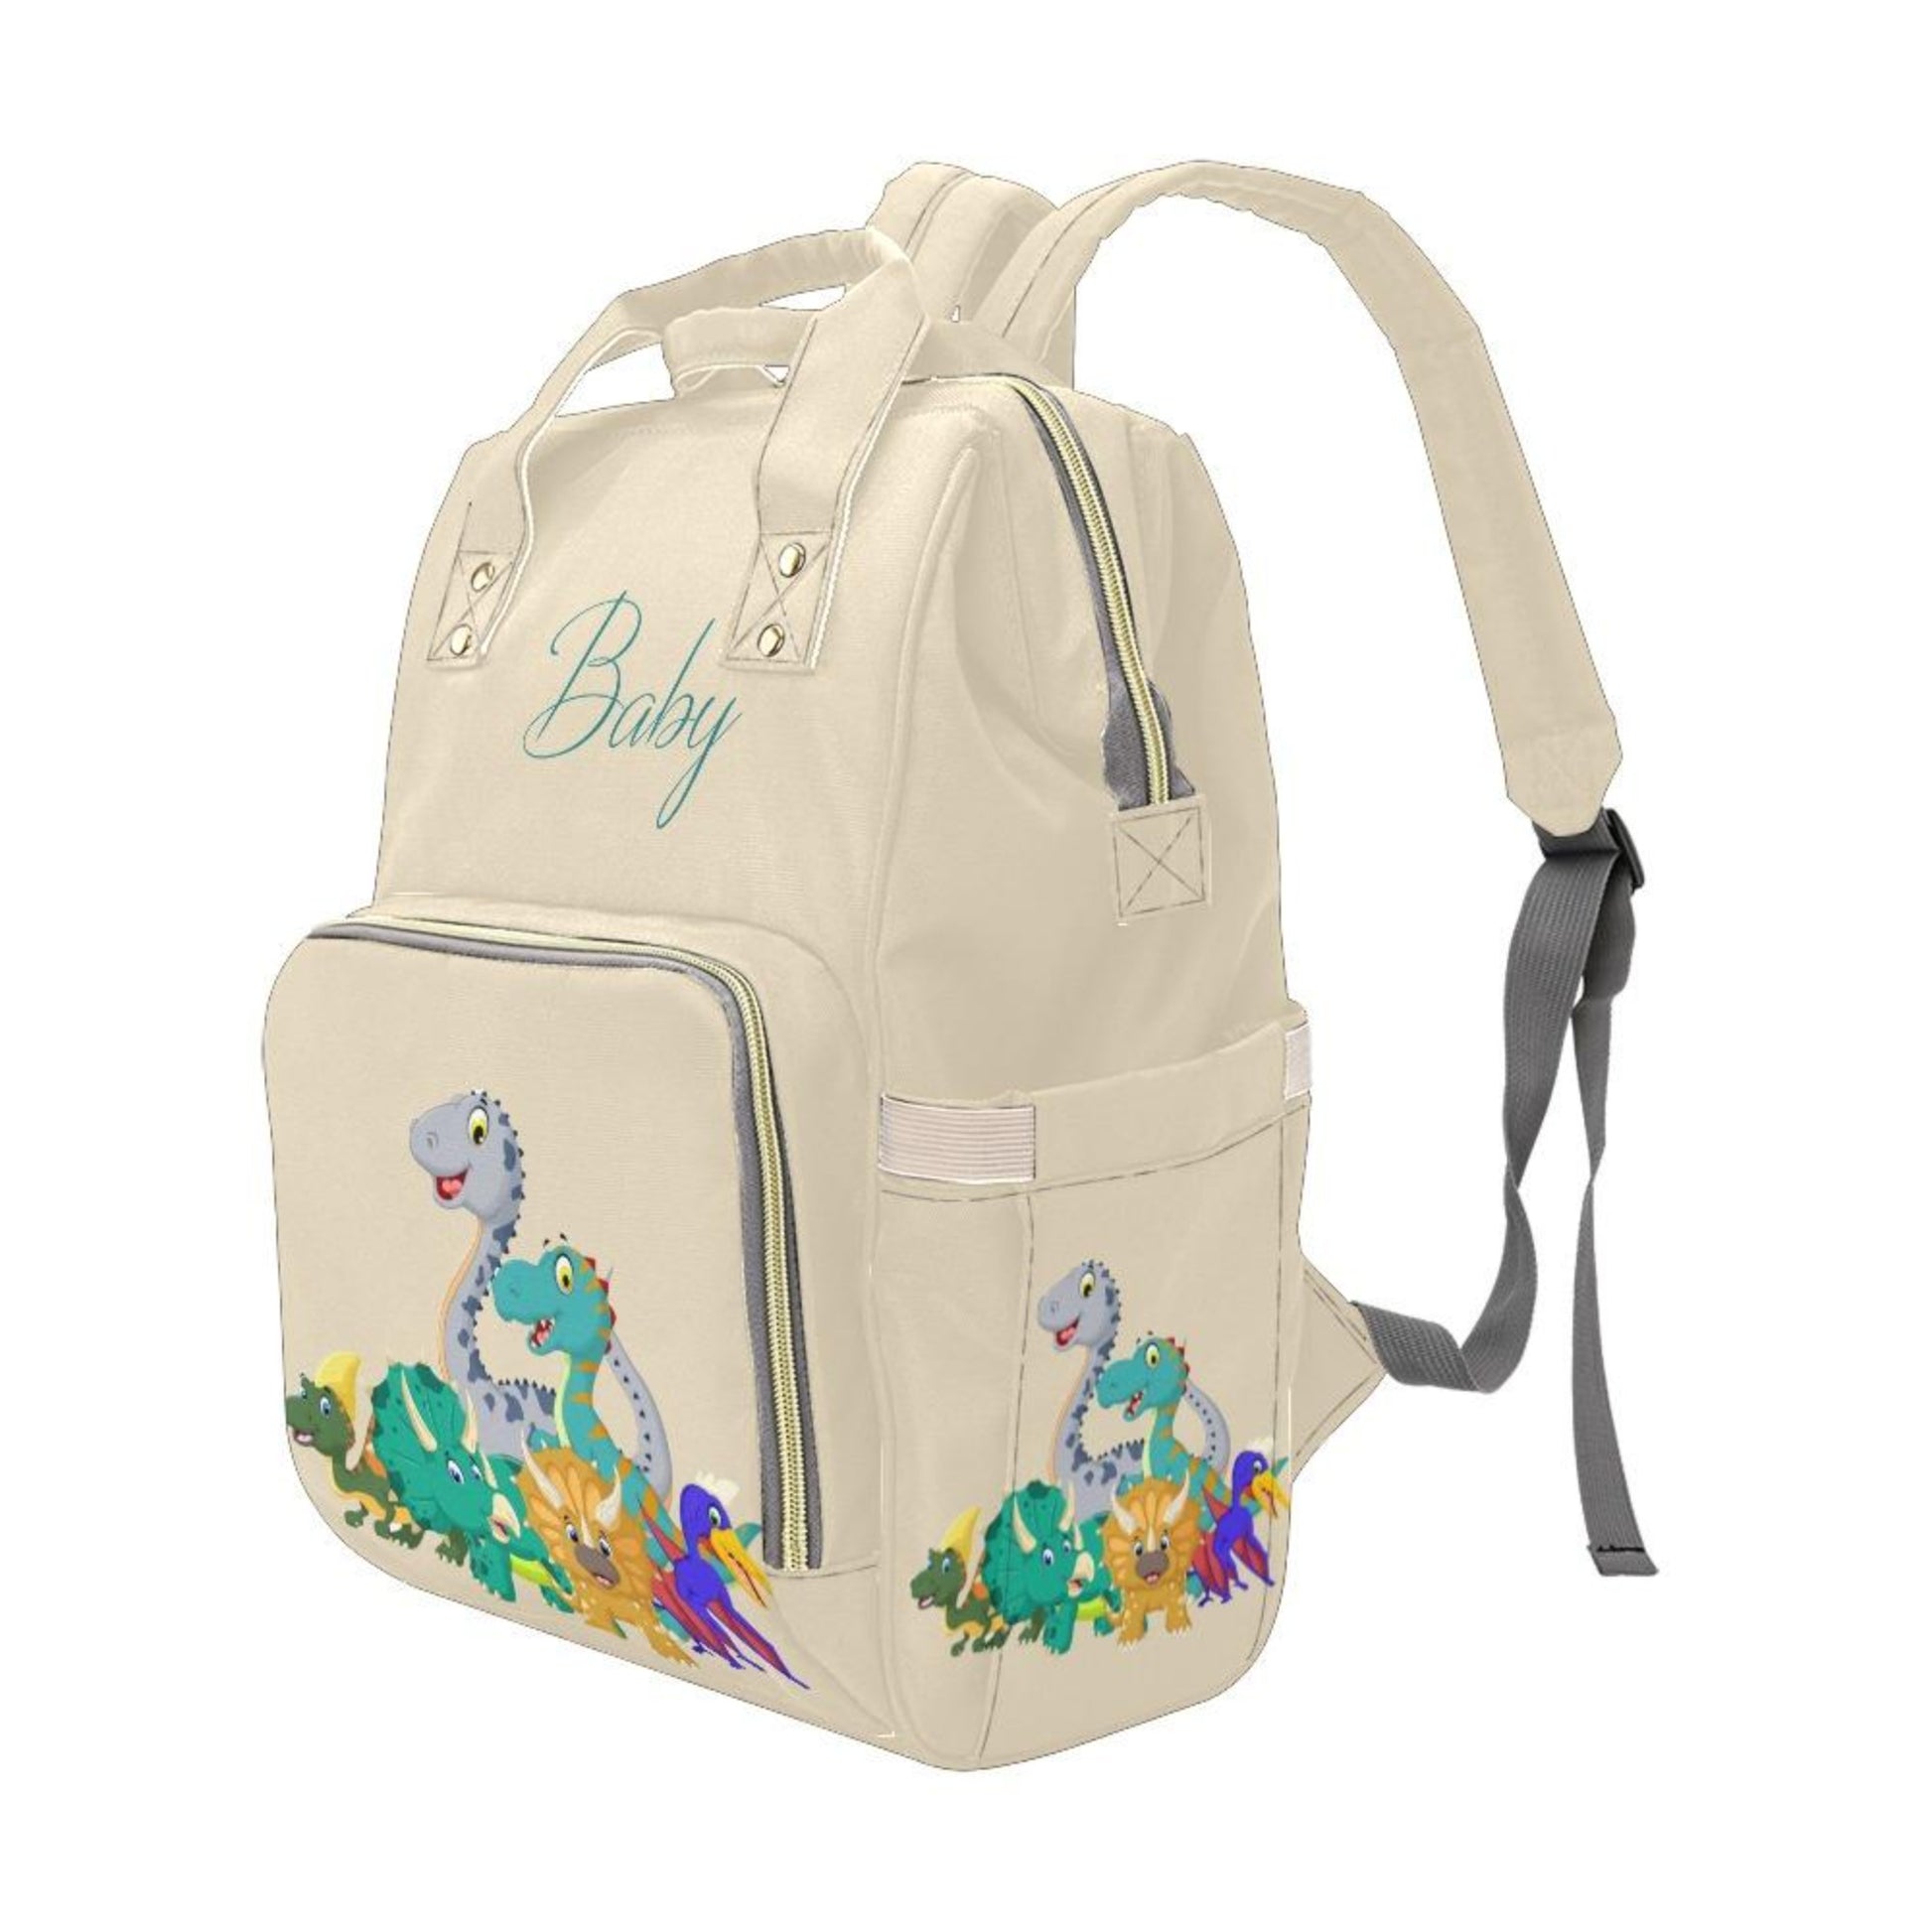  Cute Cartoon Dinosaur Baby Cub Egg Diaper Bag Backpack Baby  Nappy Changing Bags Multi Function Large Capacity Travel Bag : Baby